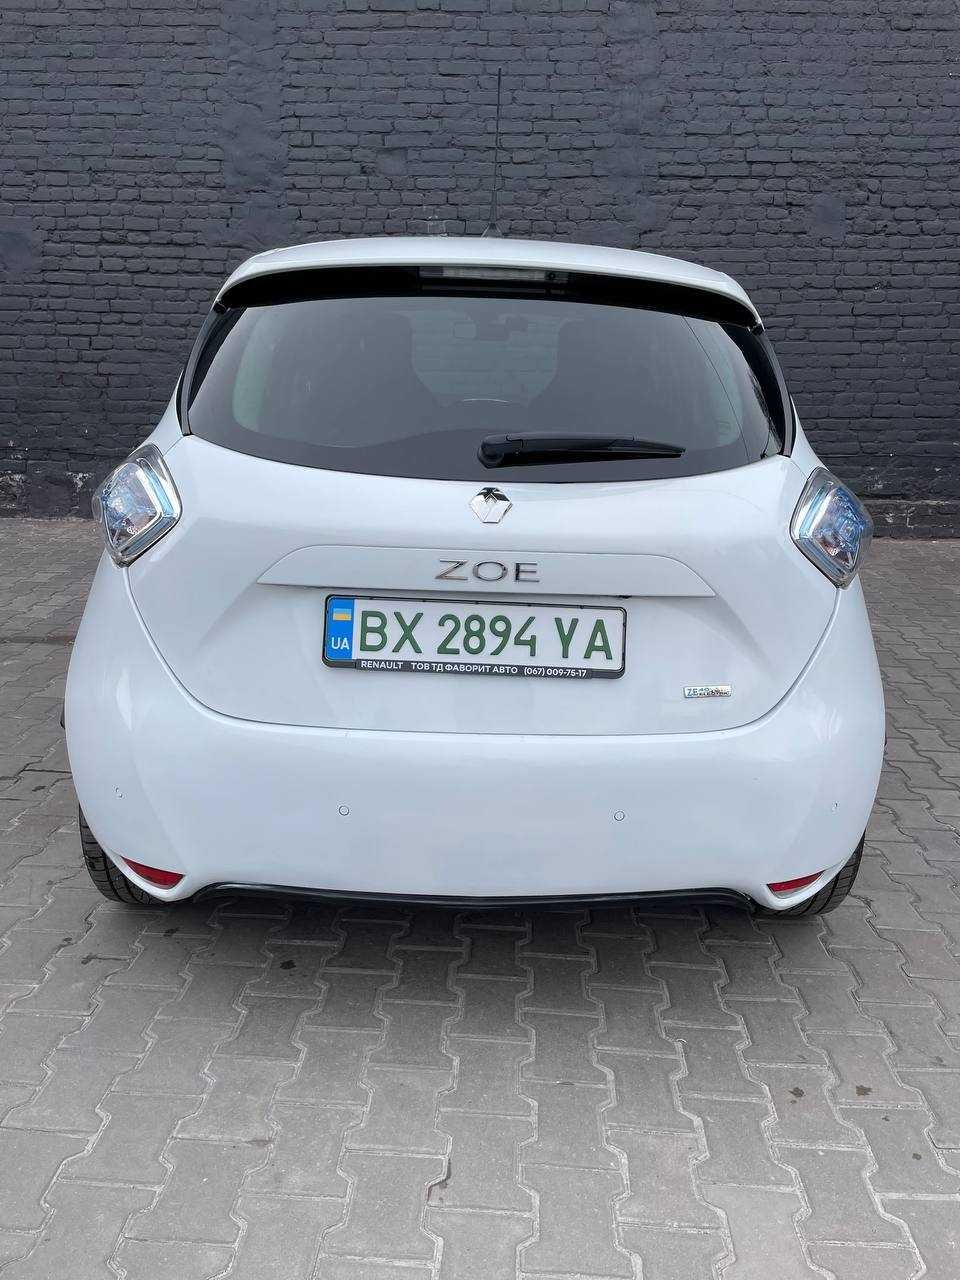 Продам Renault Zoe 2018р, Ємність акумулятора 41 кВт.г